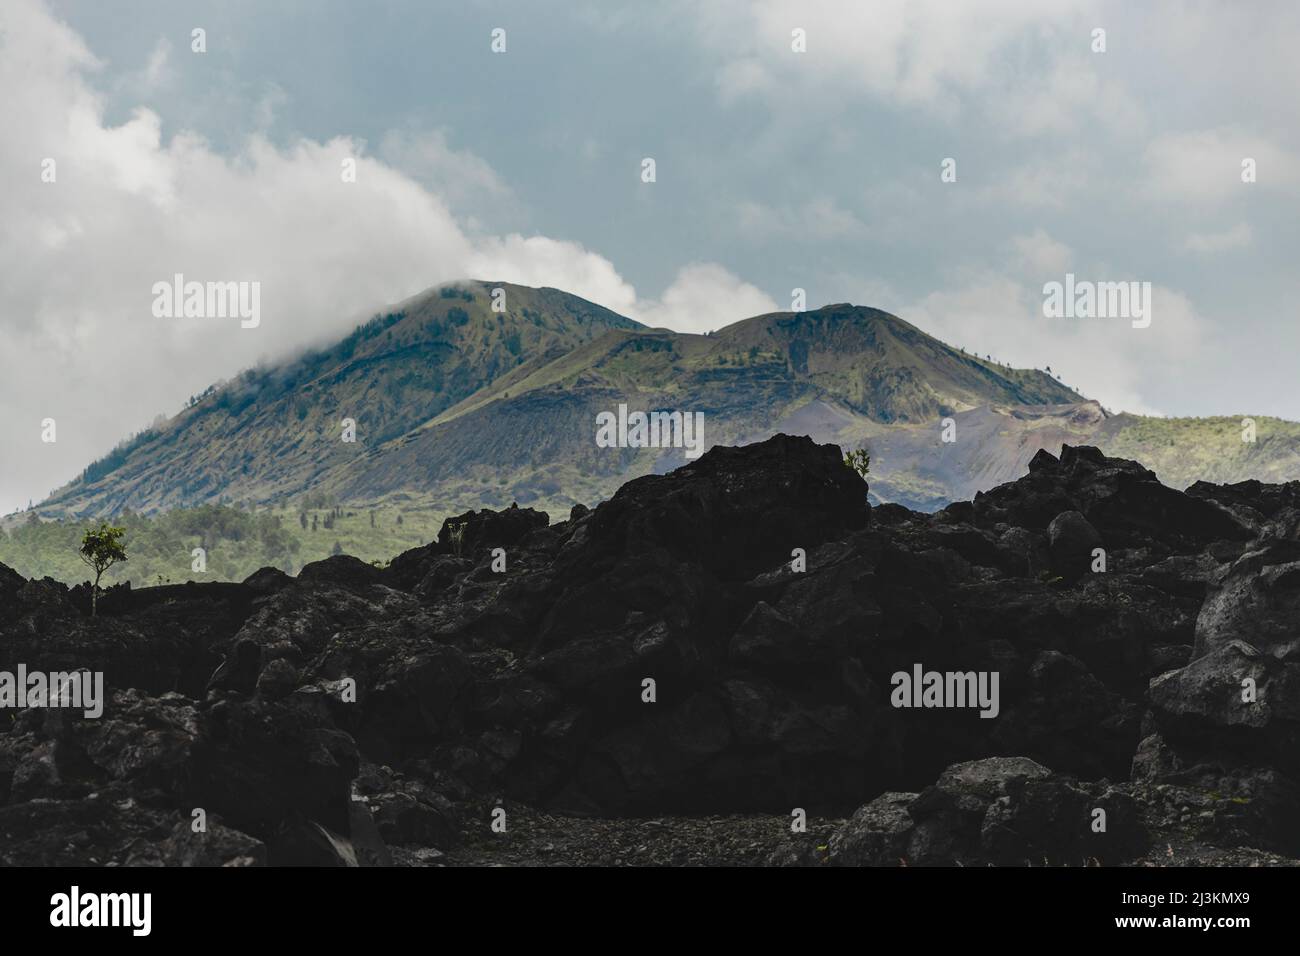 Vulkanisches Gestein und Blick auf den Berg Batur (Kintamani Volcano) in Süd-Batur mit bewölktem Himmel; Kintamani, Bangli Regency, Bali, Indonesien Stockfoto